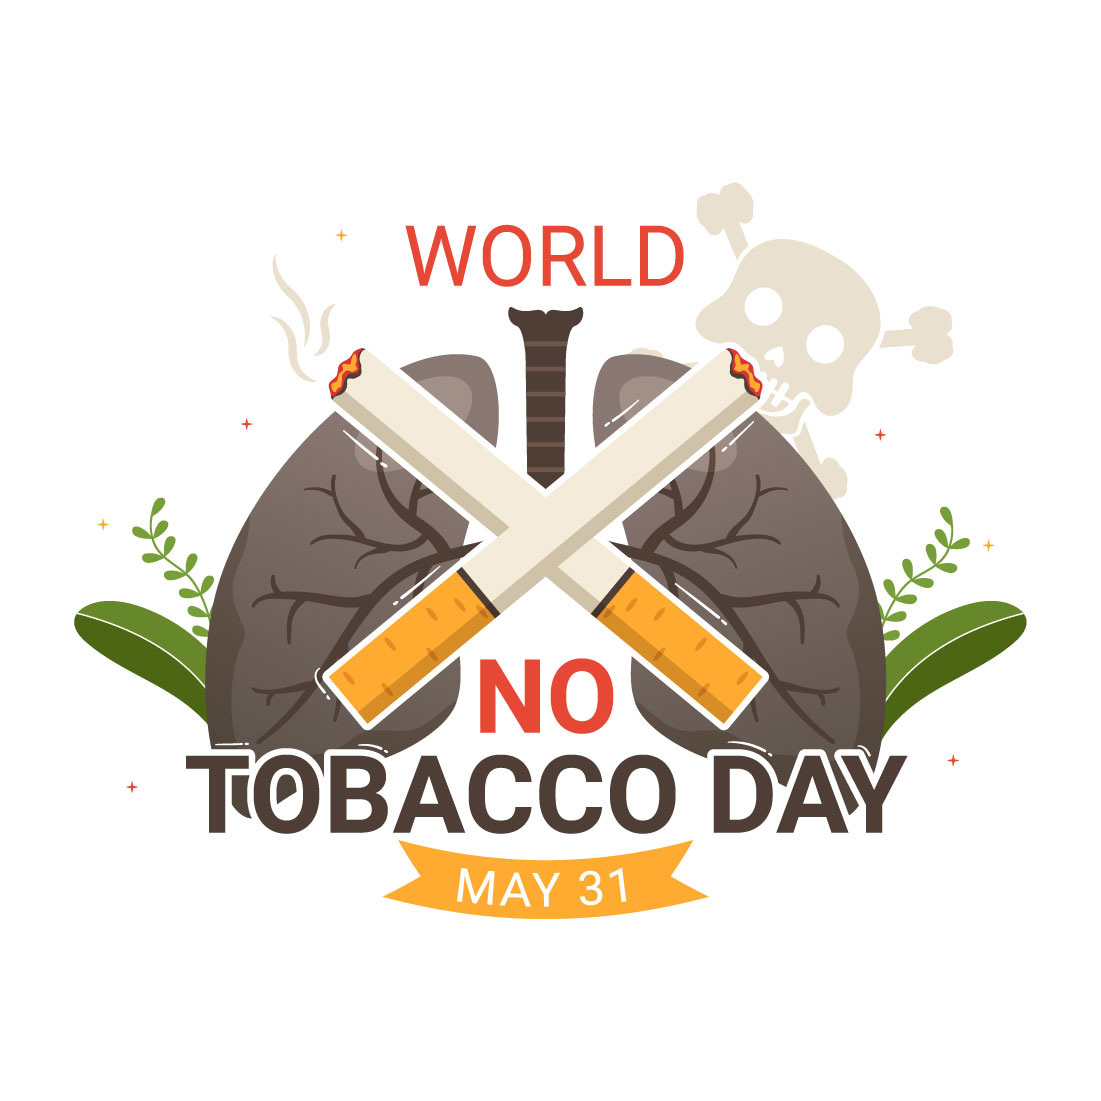 14 World No Tobacco Day Illustration cover image.